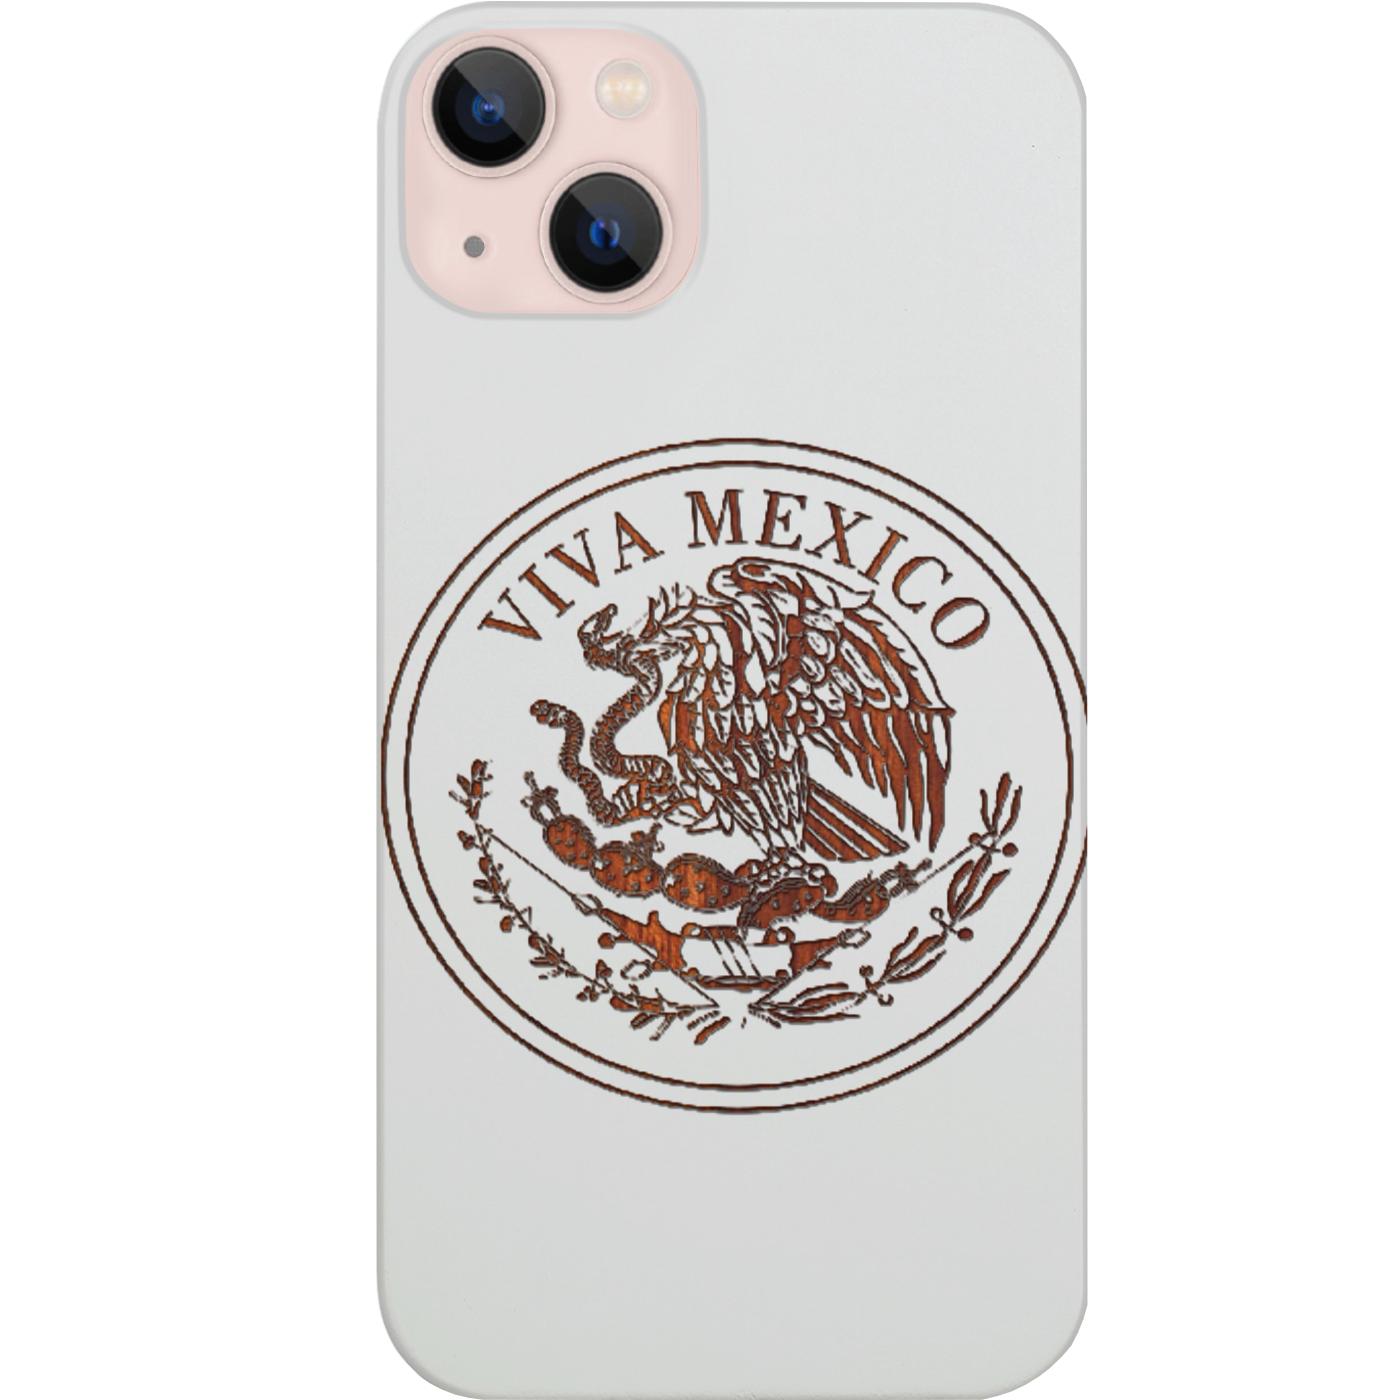 Viva Mexico - Engraved Phone Case